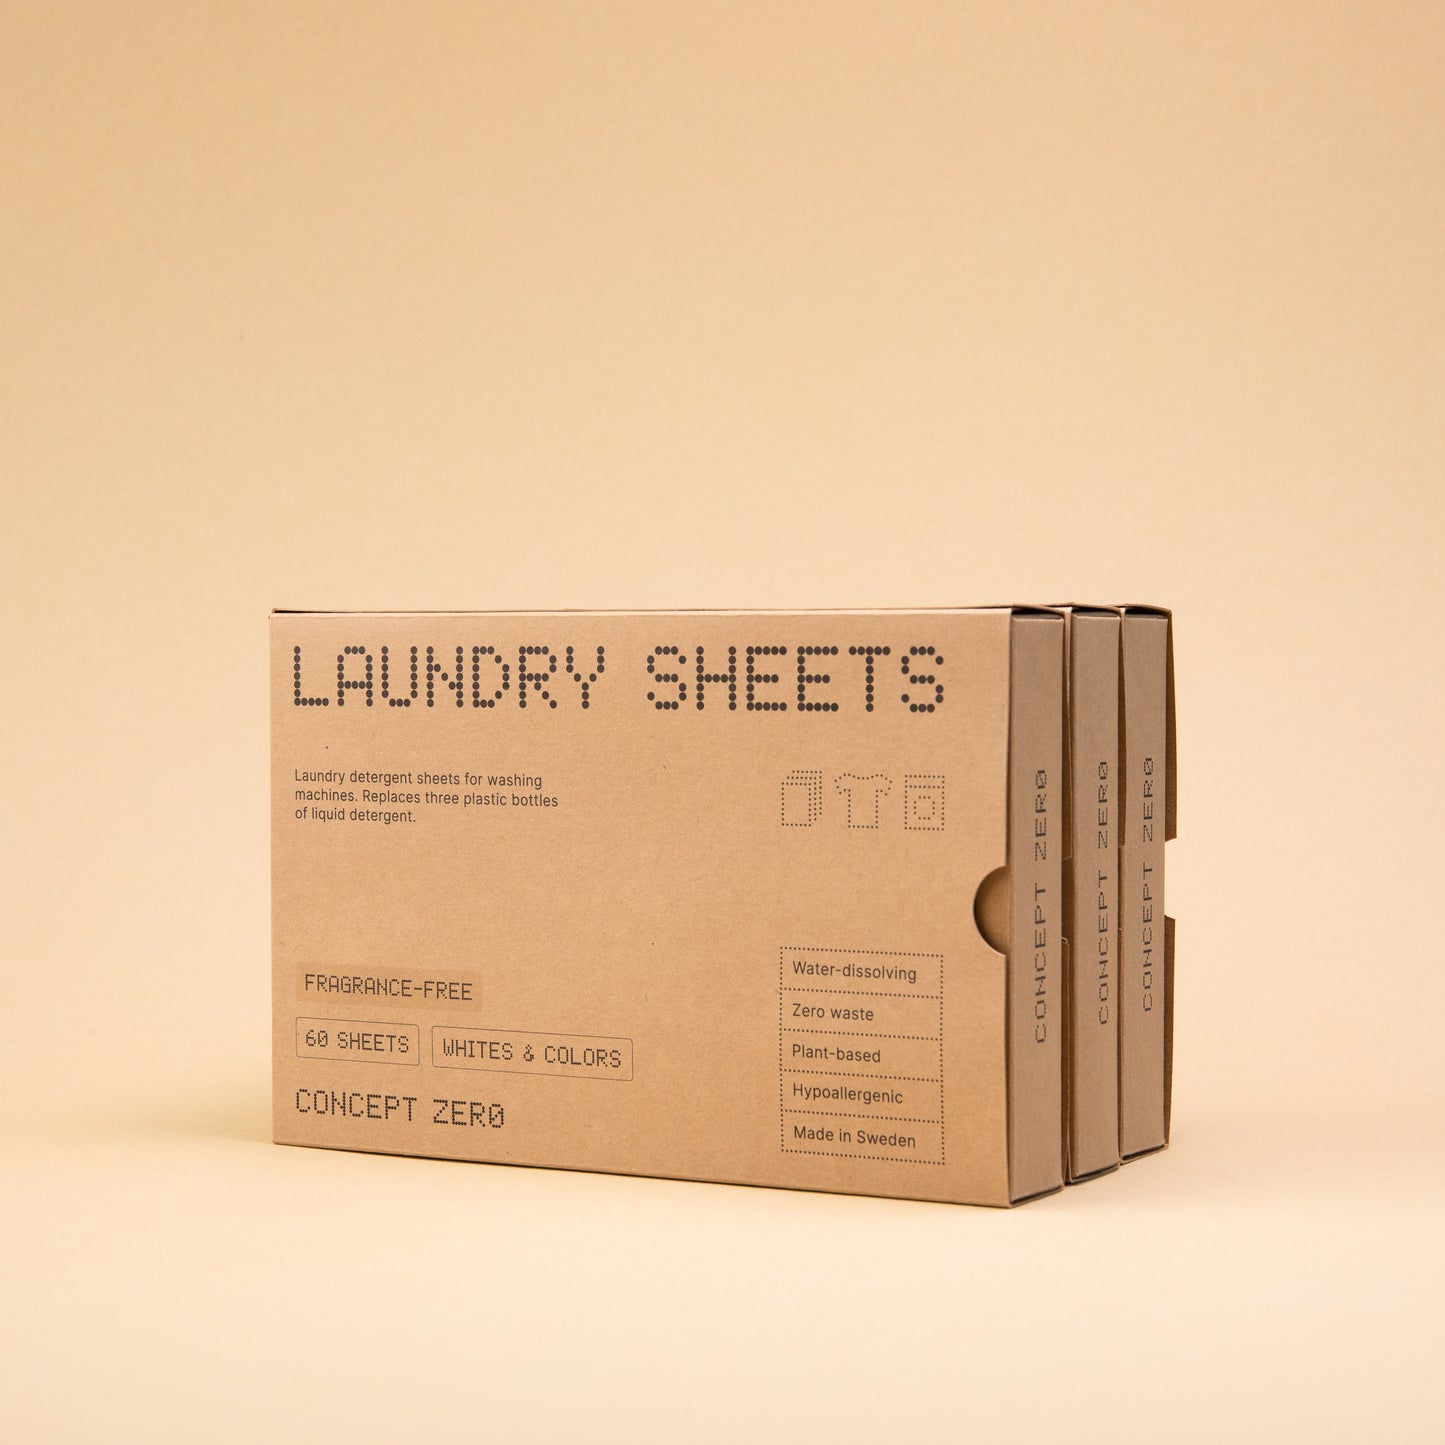 Laundry Sheets Bundle